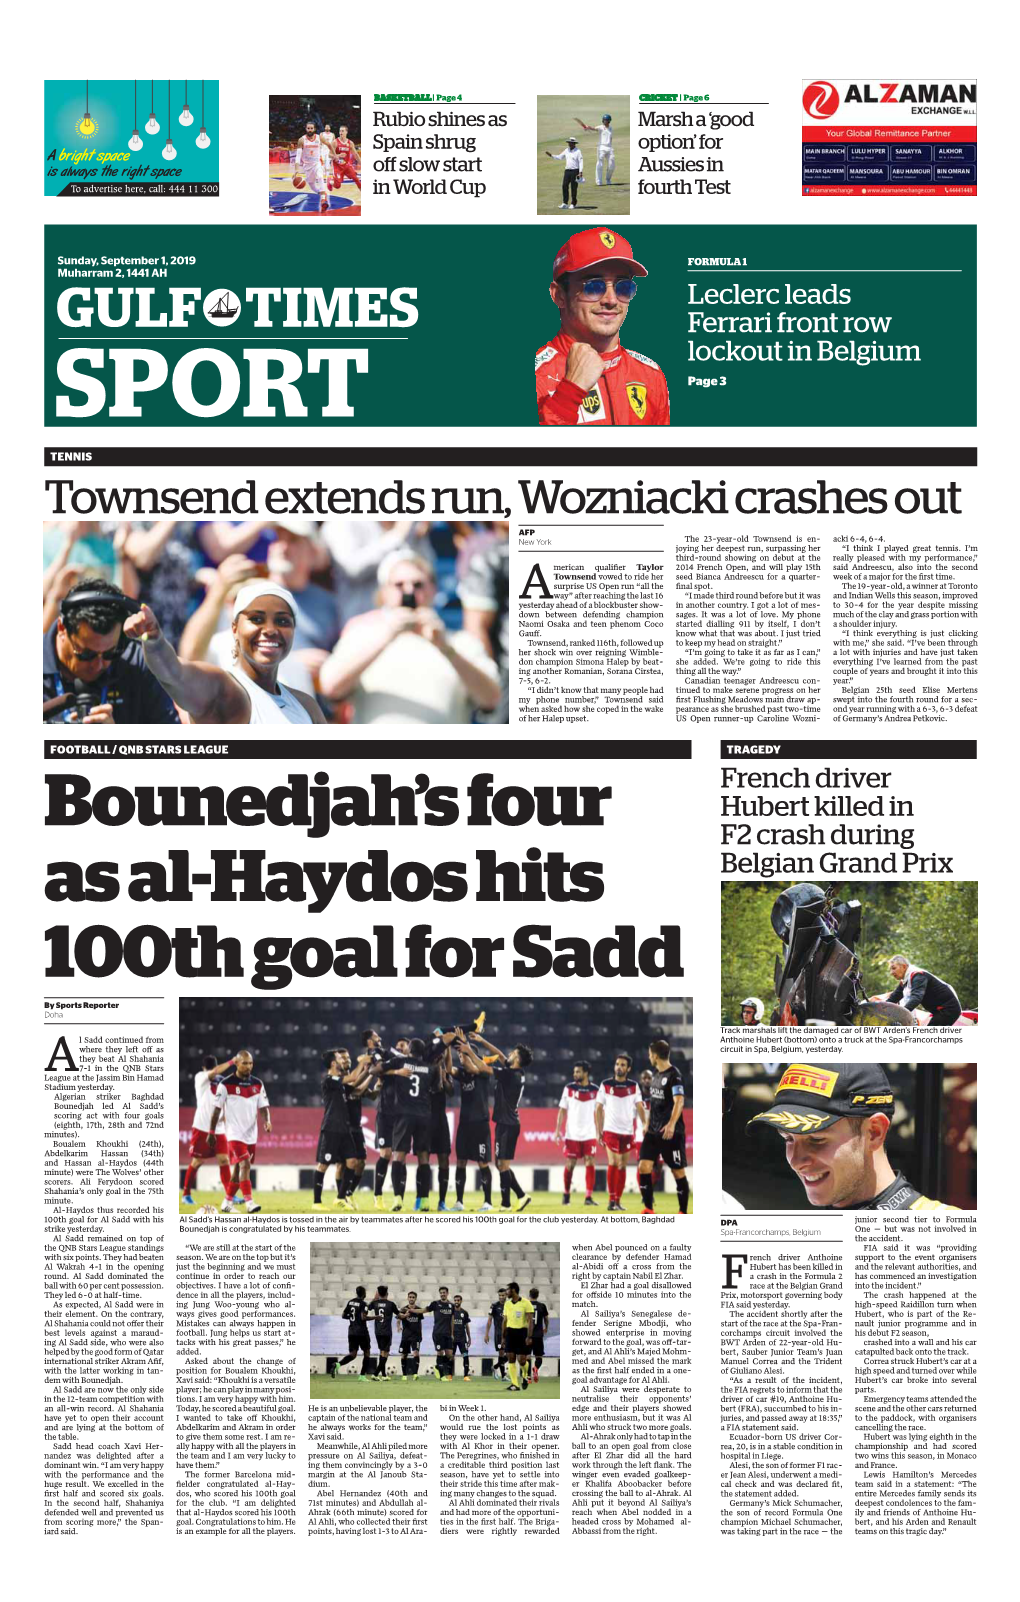 Bounedjah's Four As Al-Haydos Hits 100Th Goal for Sadd